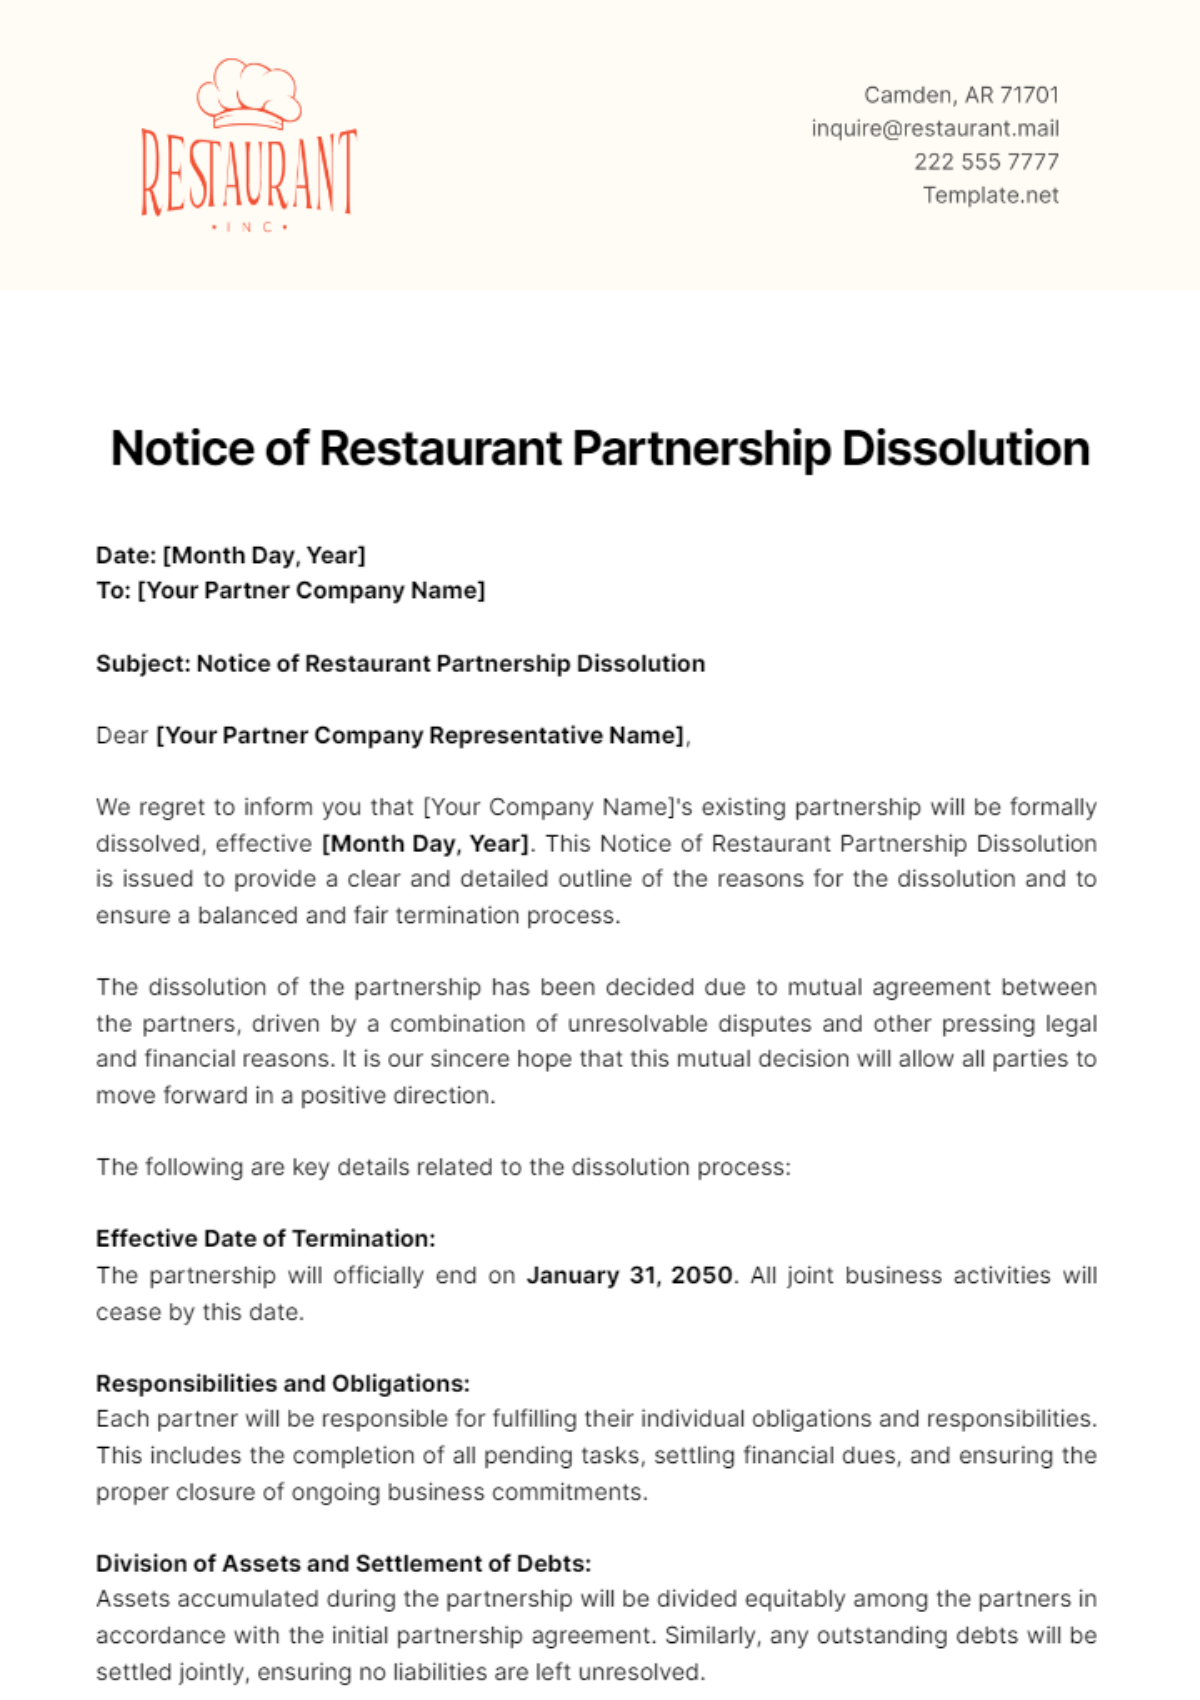 Notice of Restaurant Partnership Dissolution Template